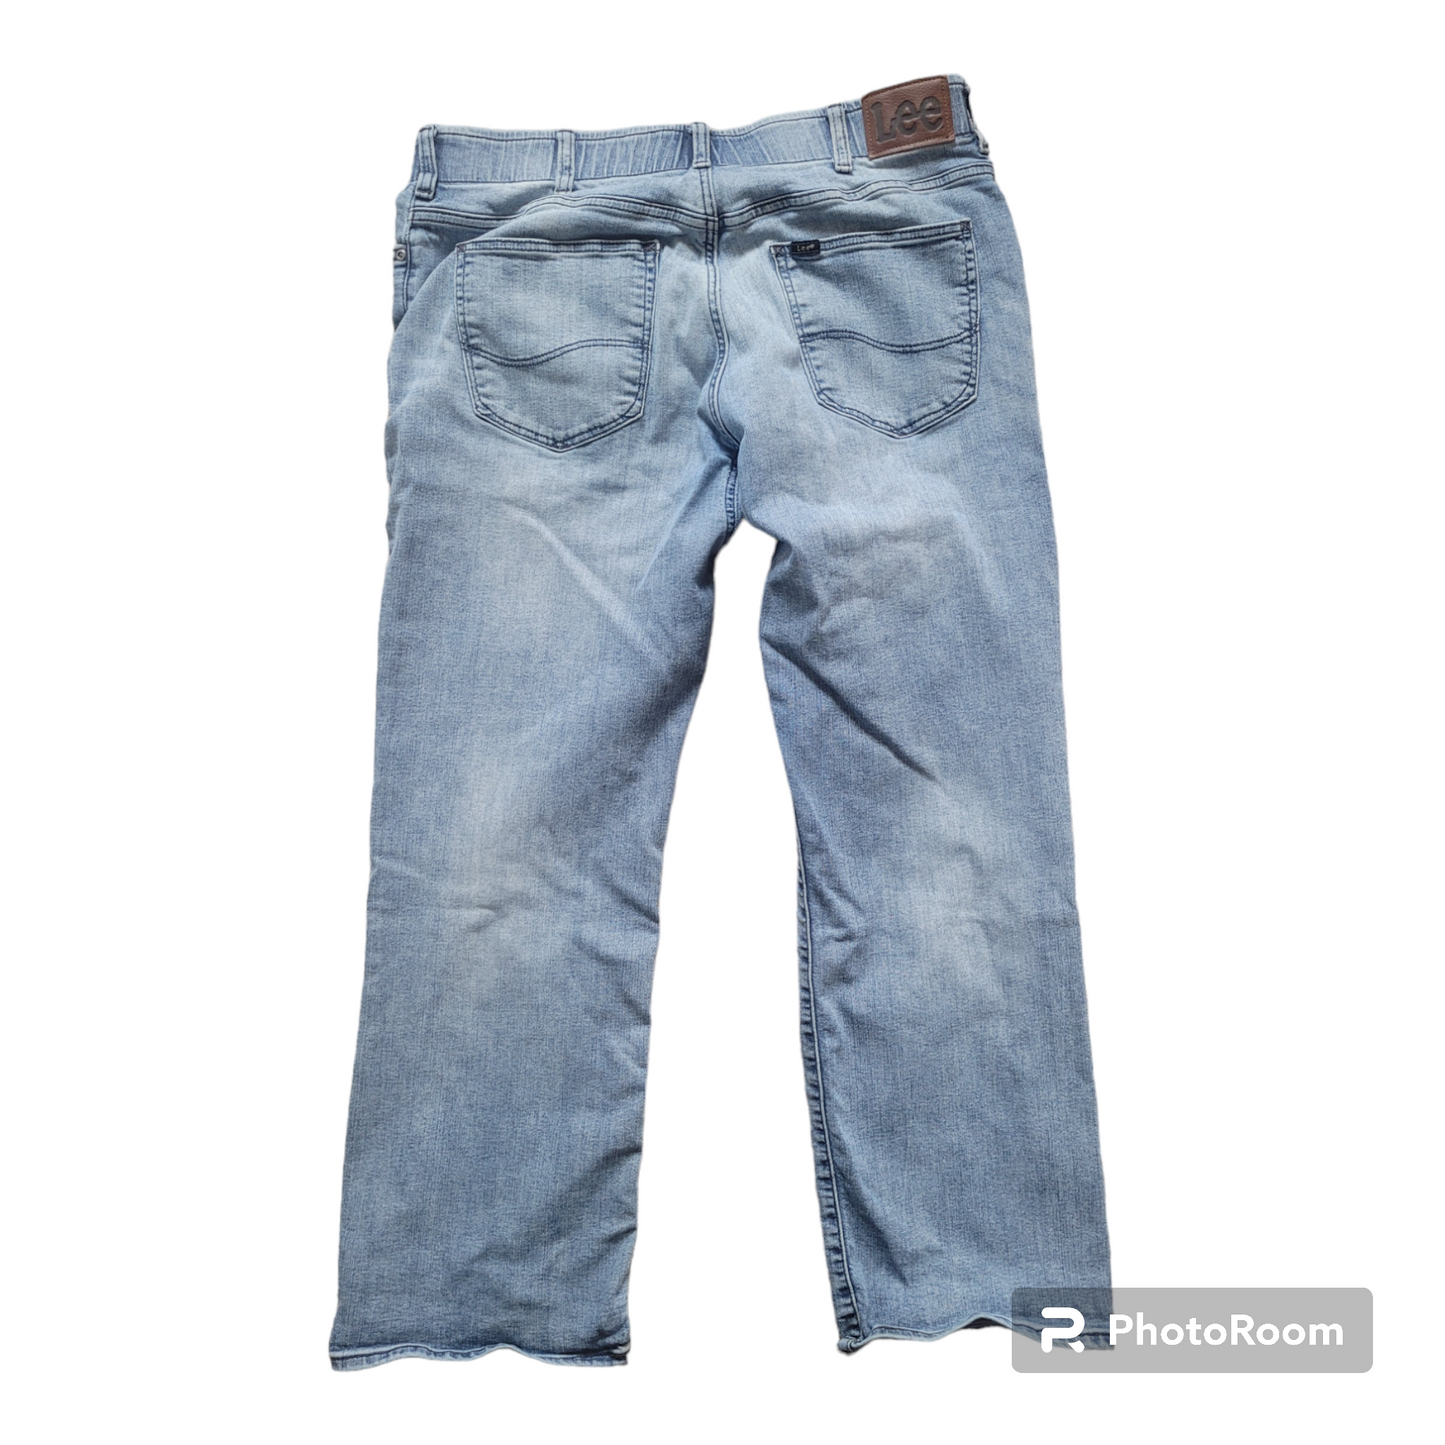 Lee Men's Jeans Stretch Fit 36-38 Waist